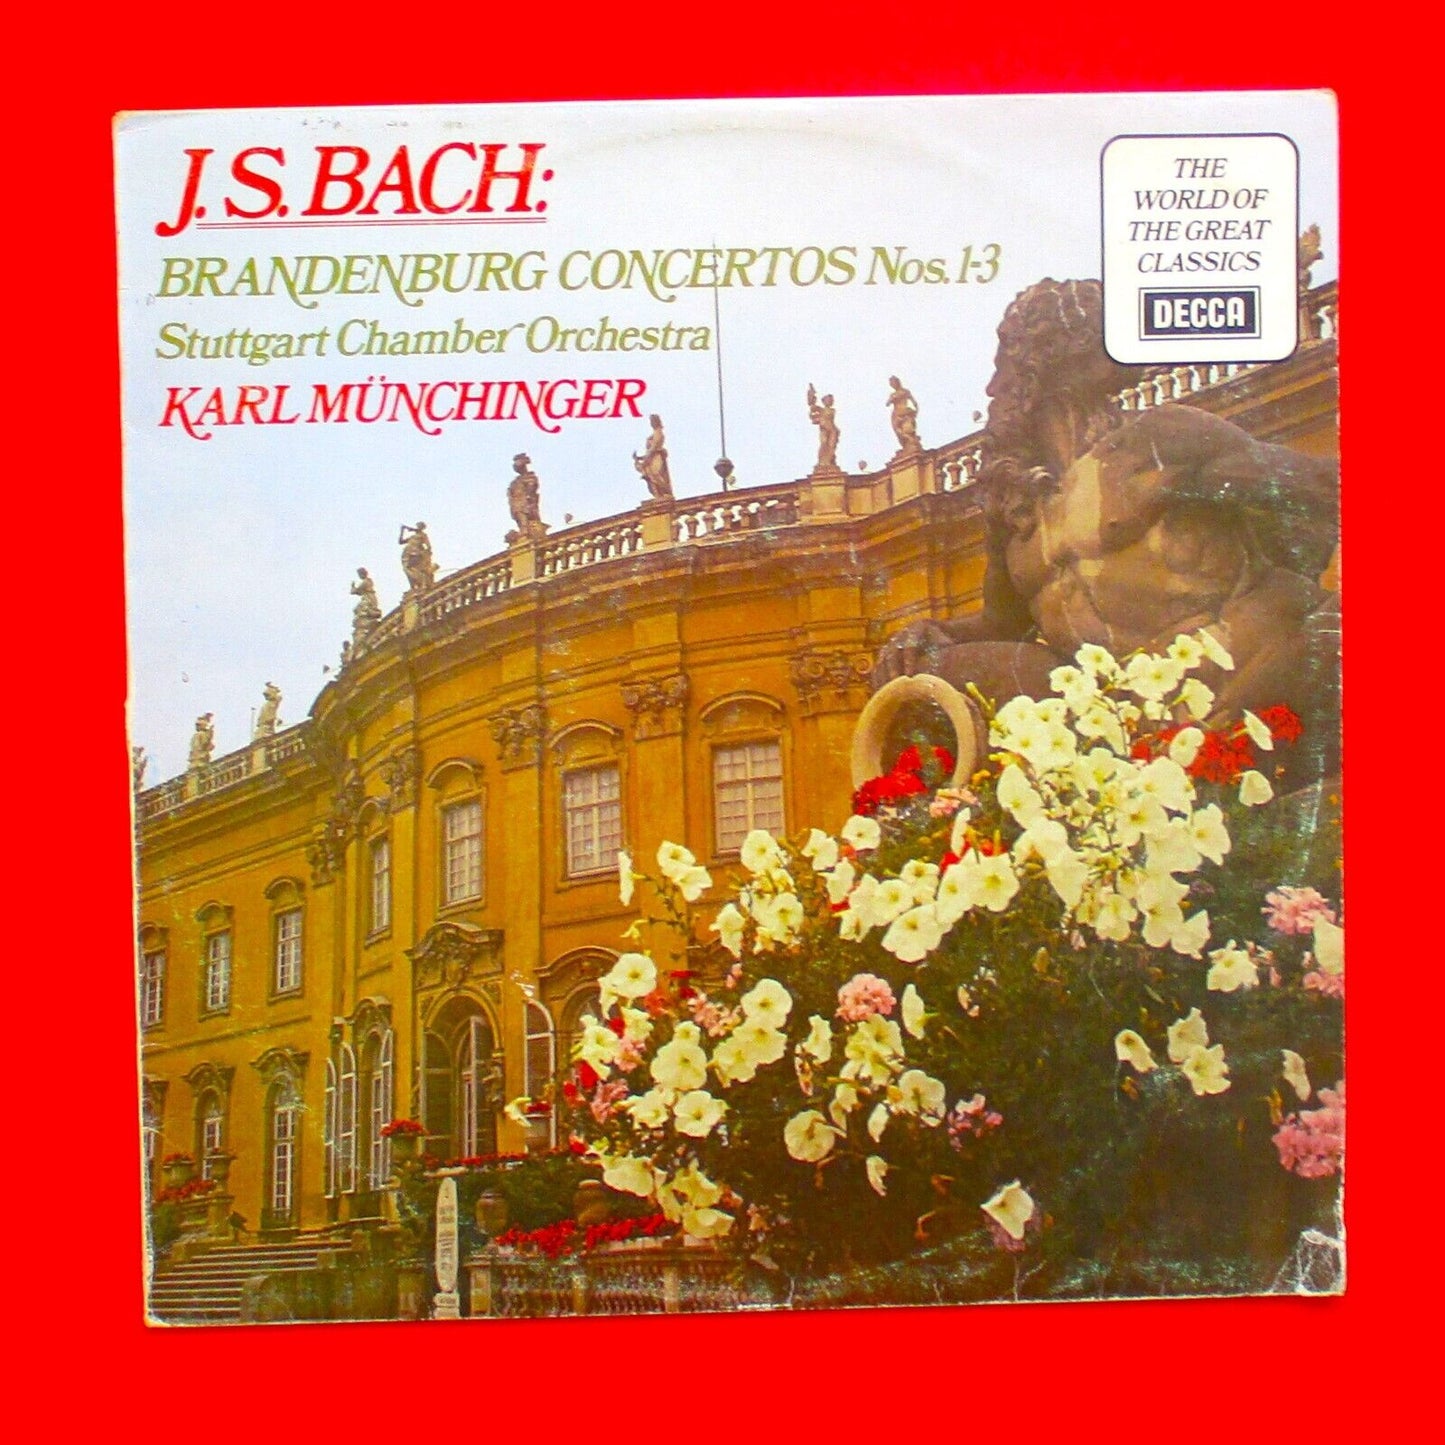 Bach Brandenburg Concertos Nos. 1-3 1975 Vinyl Album LP Australian Decca